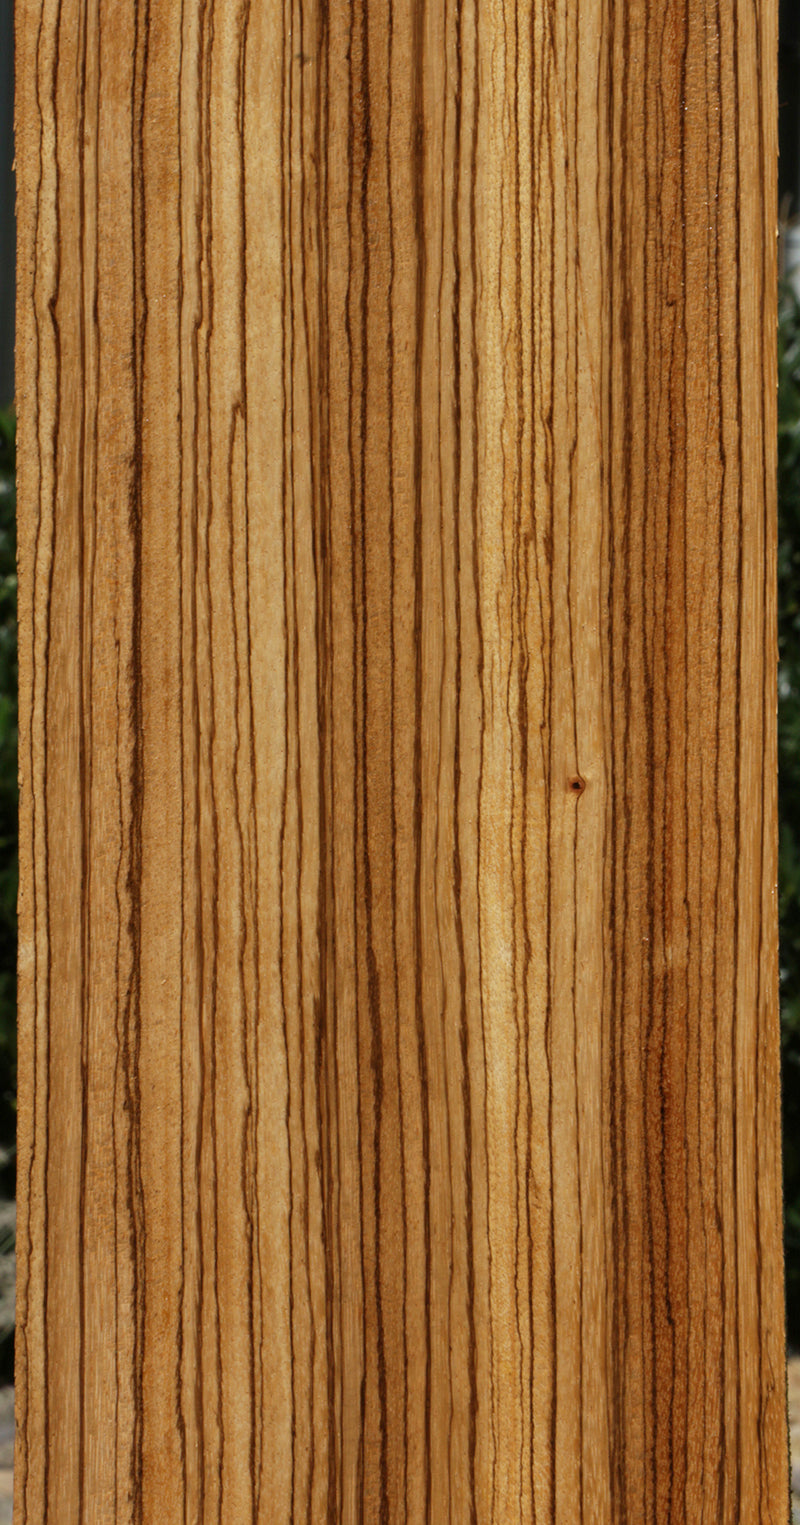 Zebrawood Lumber